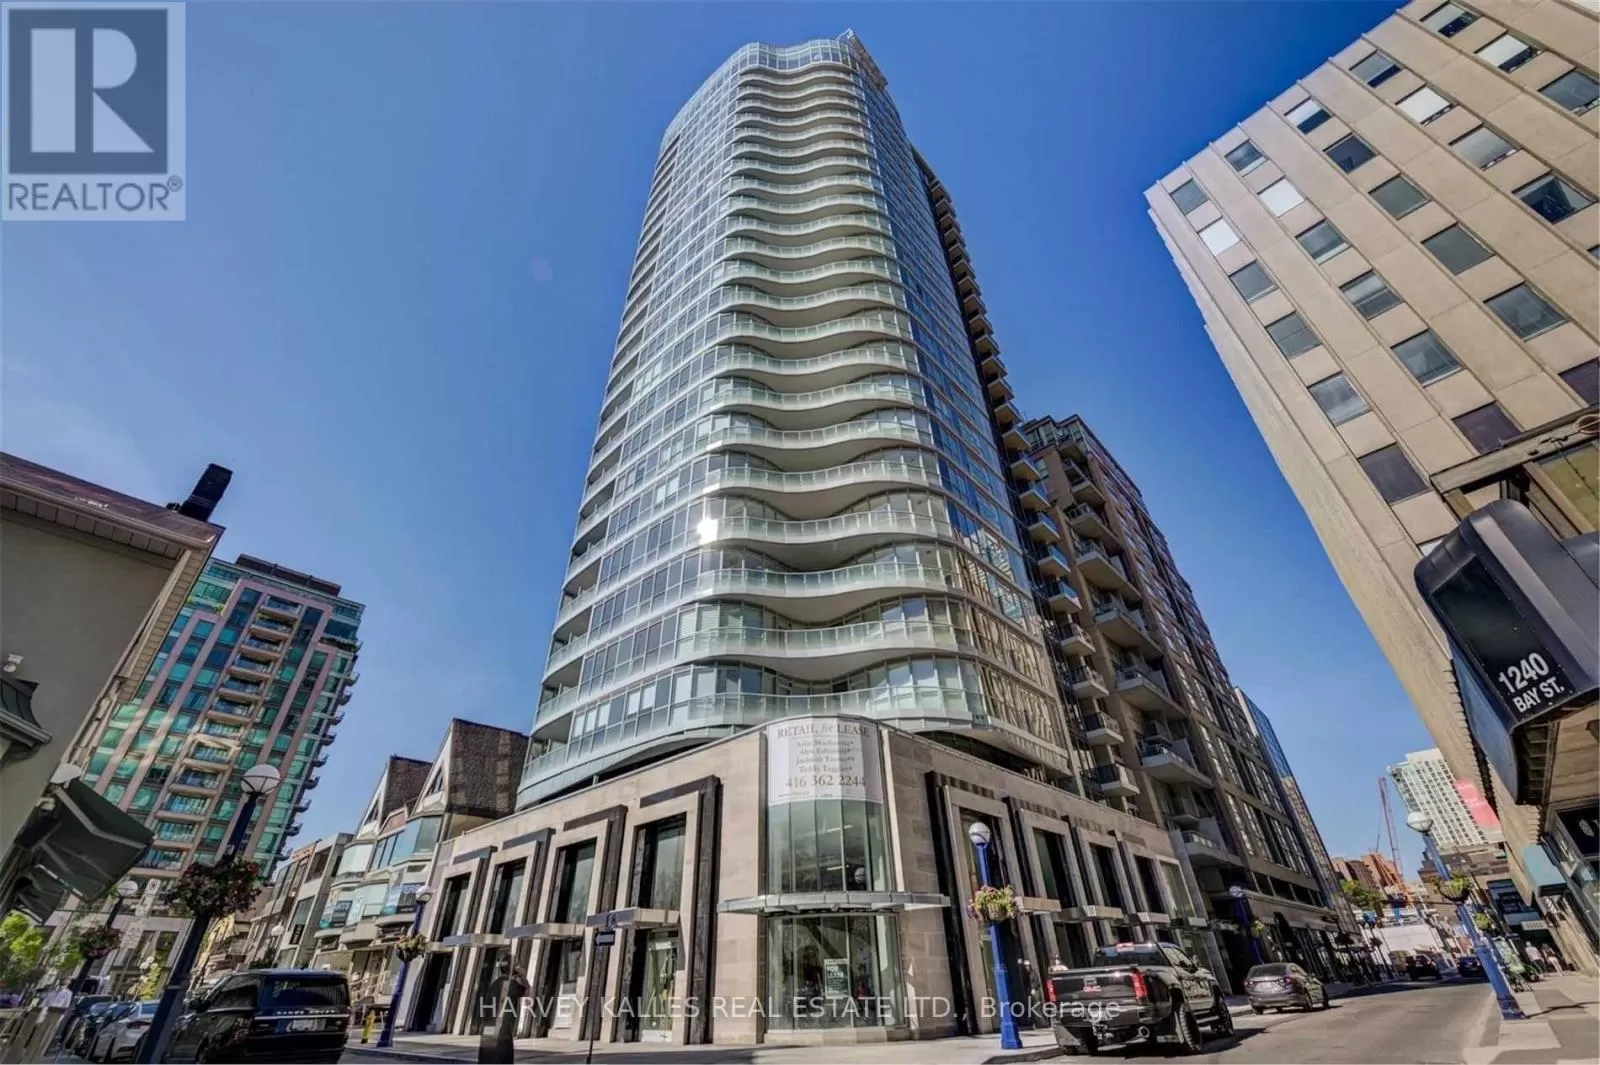 Apartment for rent: 1002 - 88 Cumberland Street, Toronto, Ontario M5R 1A3